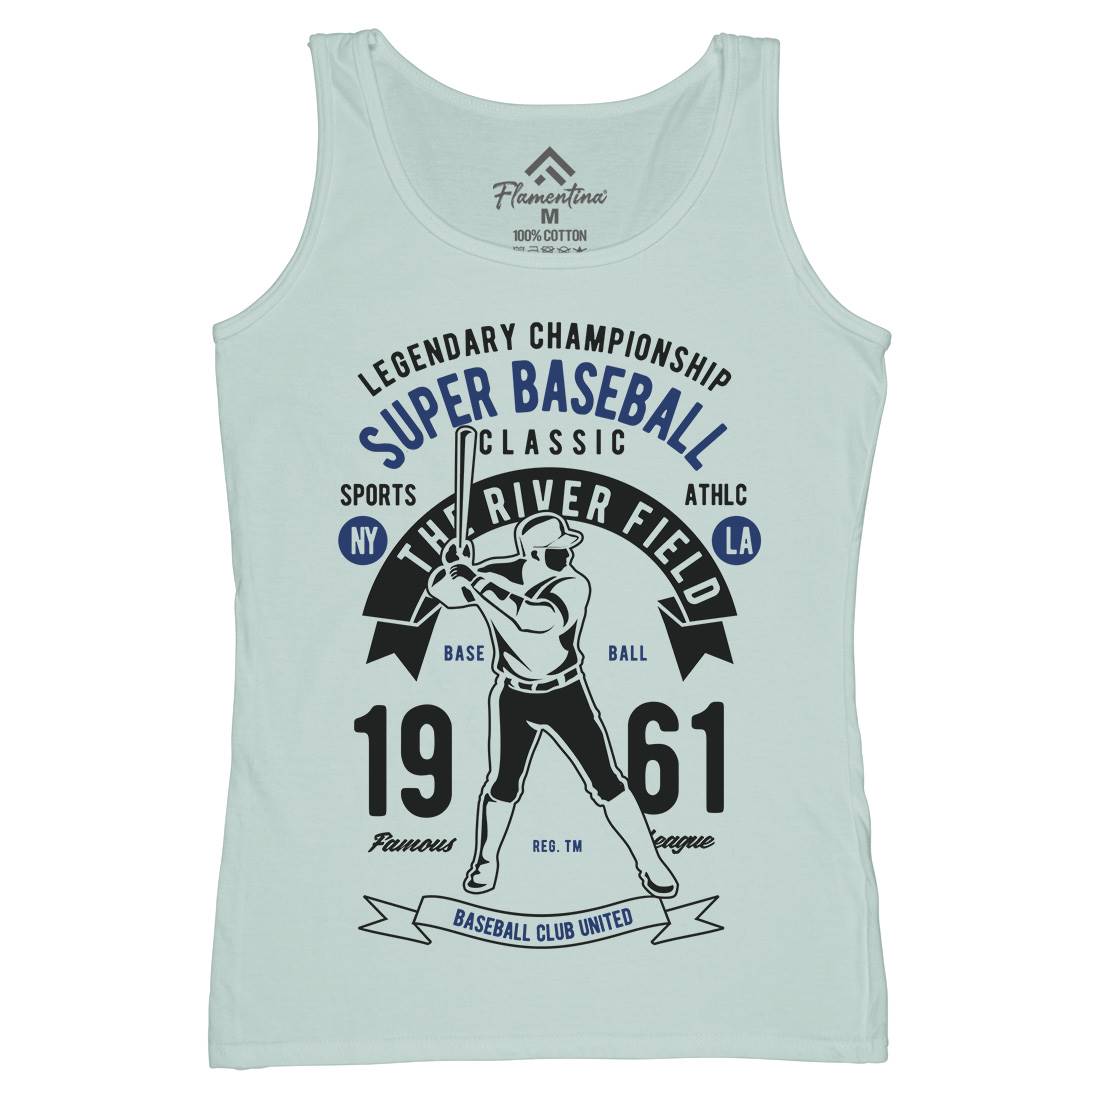 Super Baseball Womens Organic Tank Top Vest Sport B455